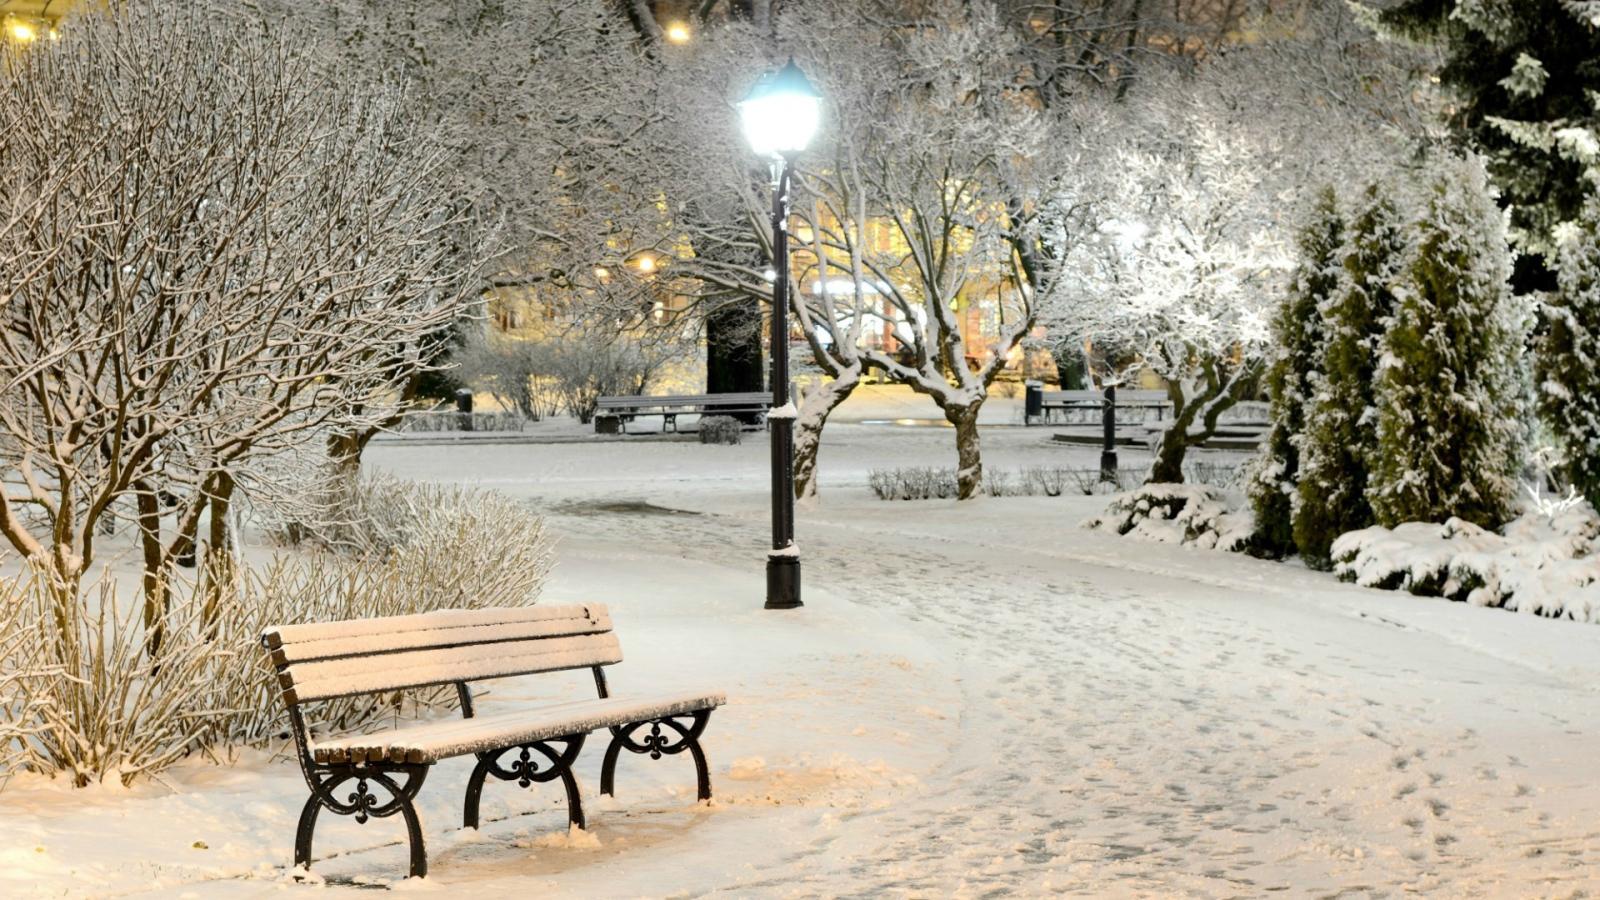 Snow Covered Bench In Winter Park Desktop Wallpaper 1600x900